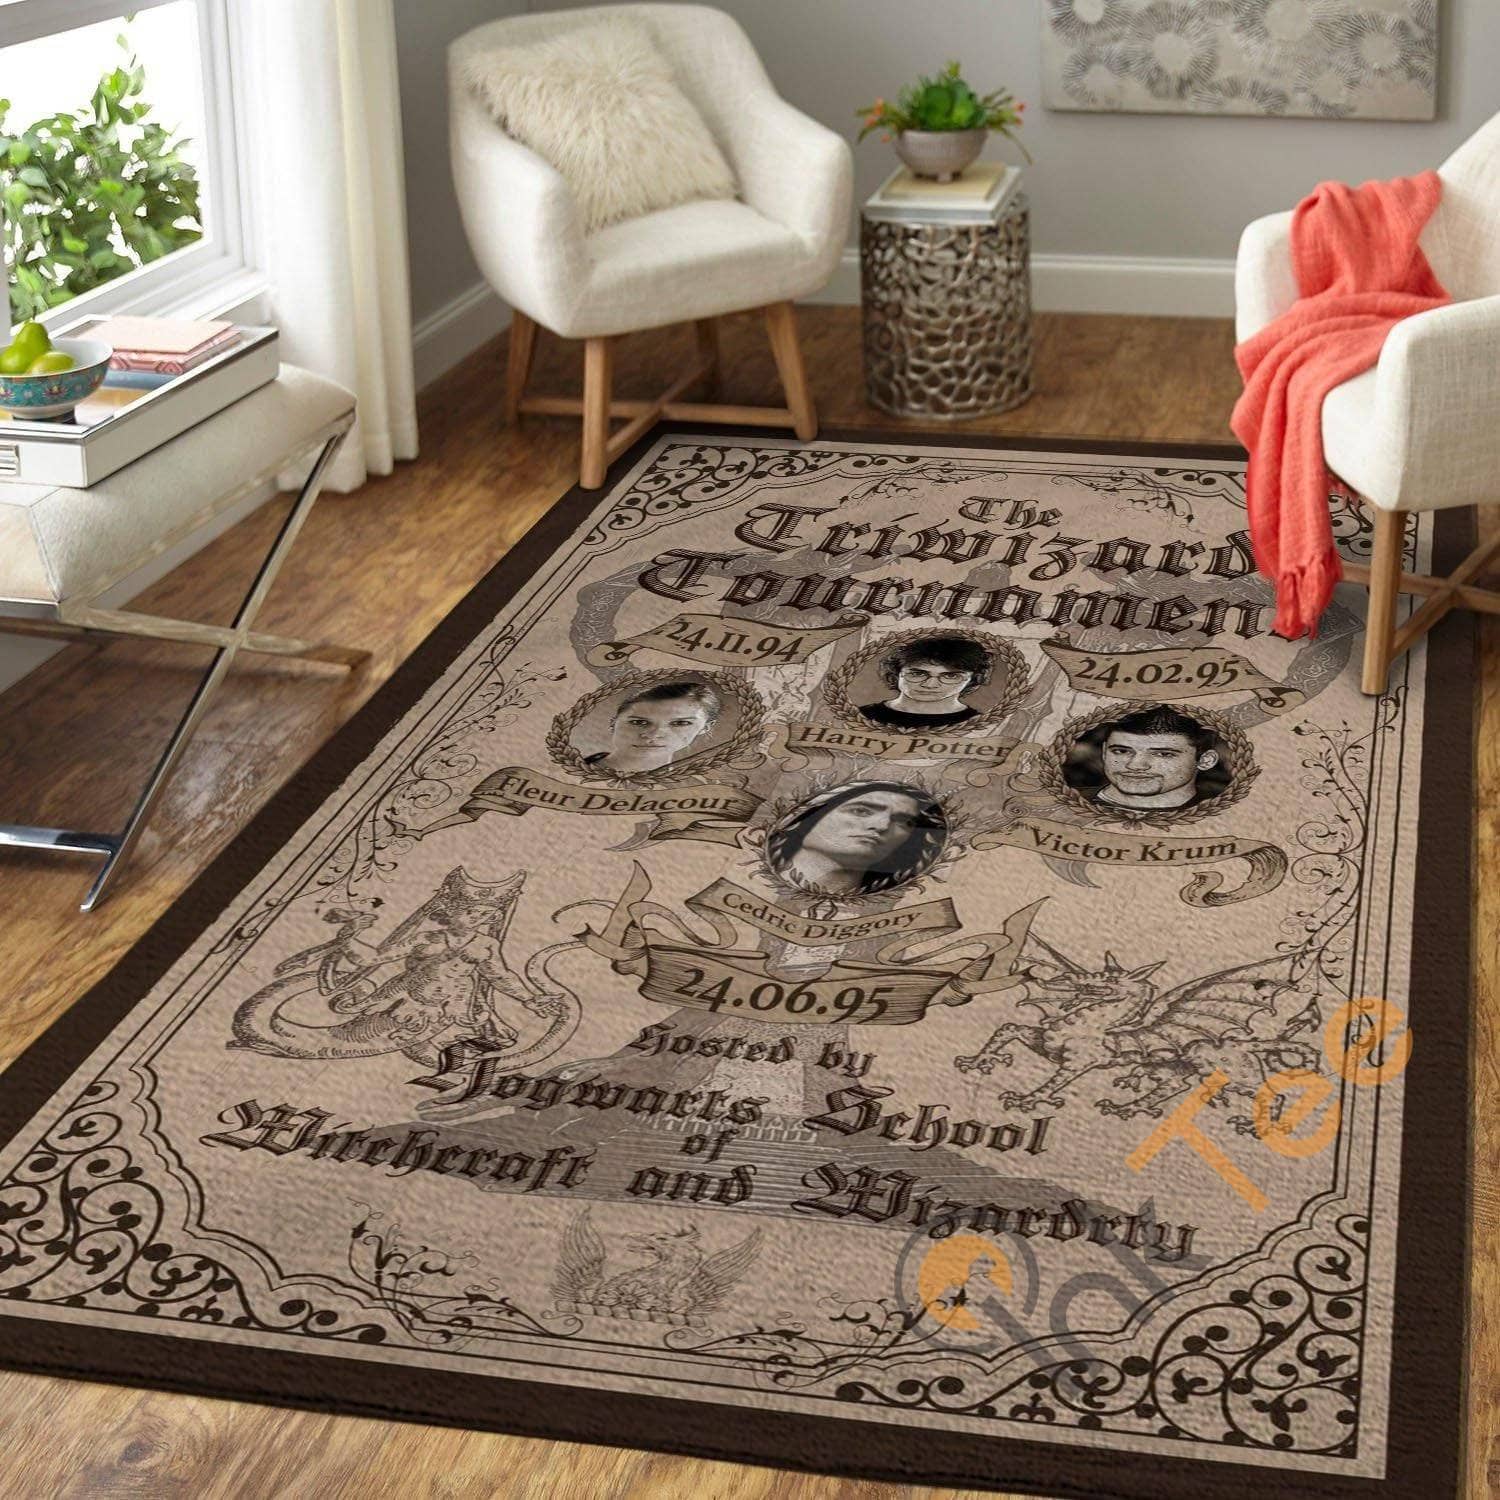 Harry Potter The Triwizard Tournament Carpet Living Room Floor Decor Gift For Potter's Fan Rug